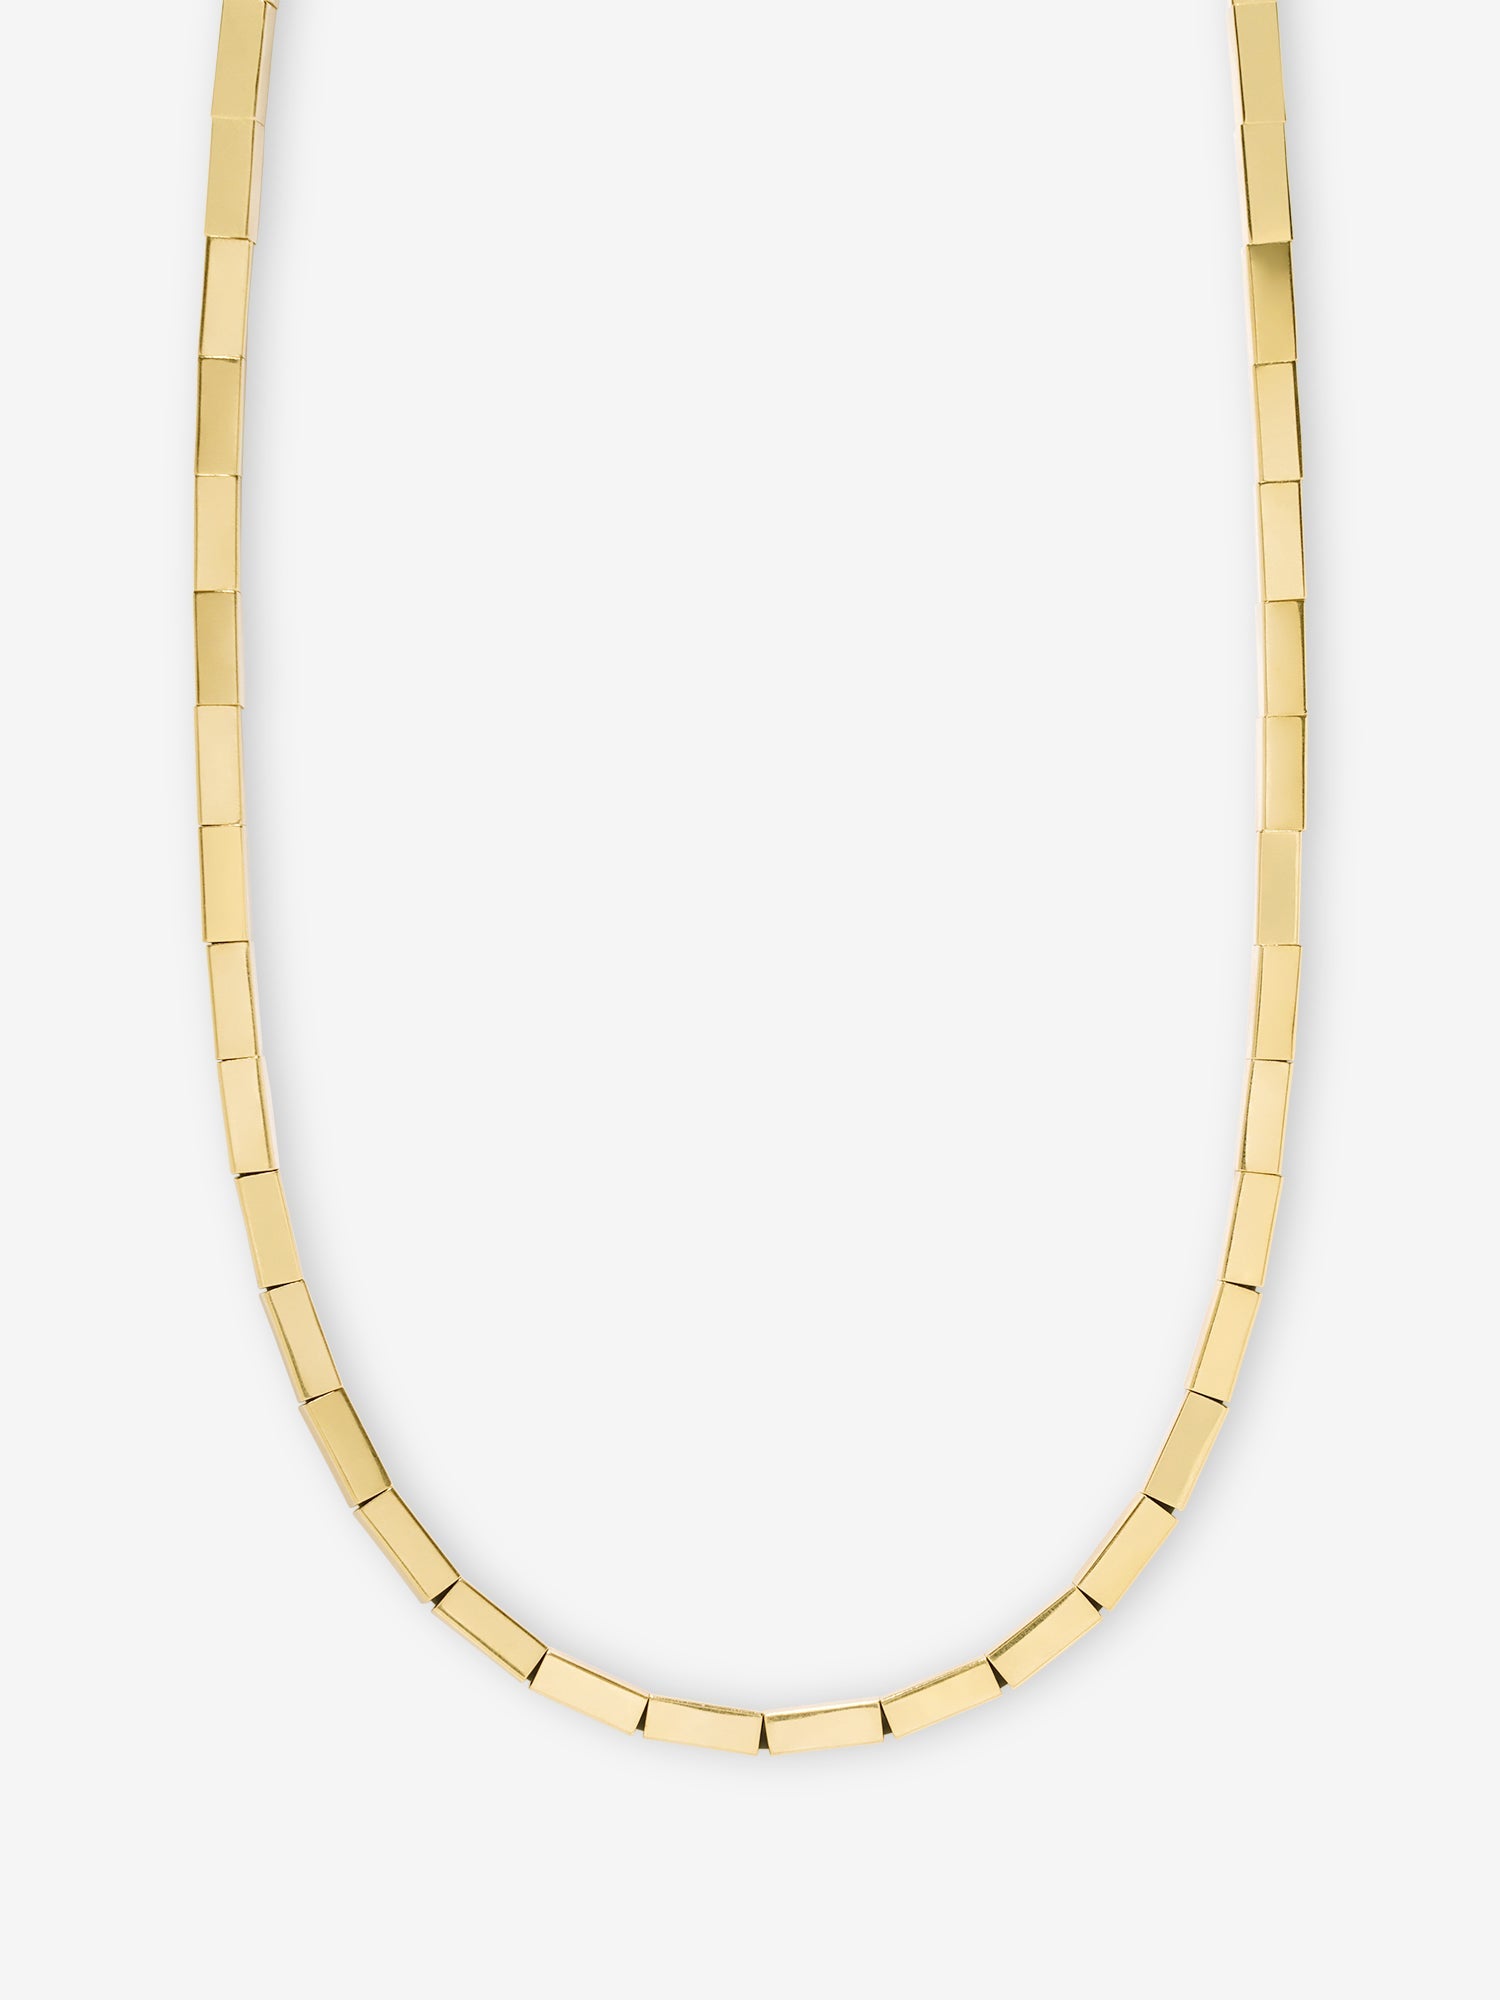 Large Gold Bar Necklace